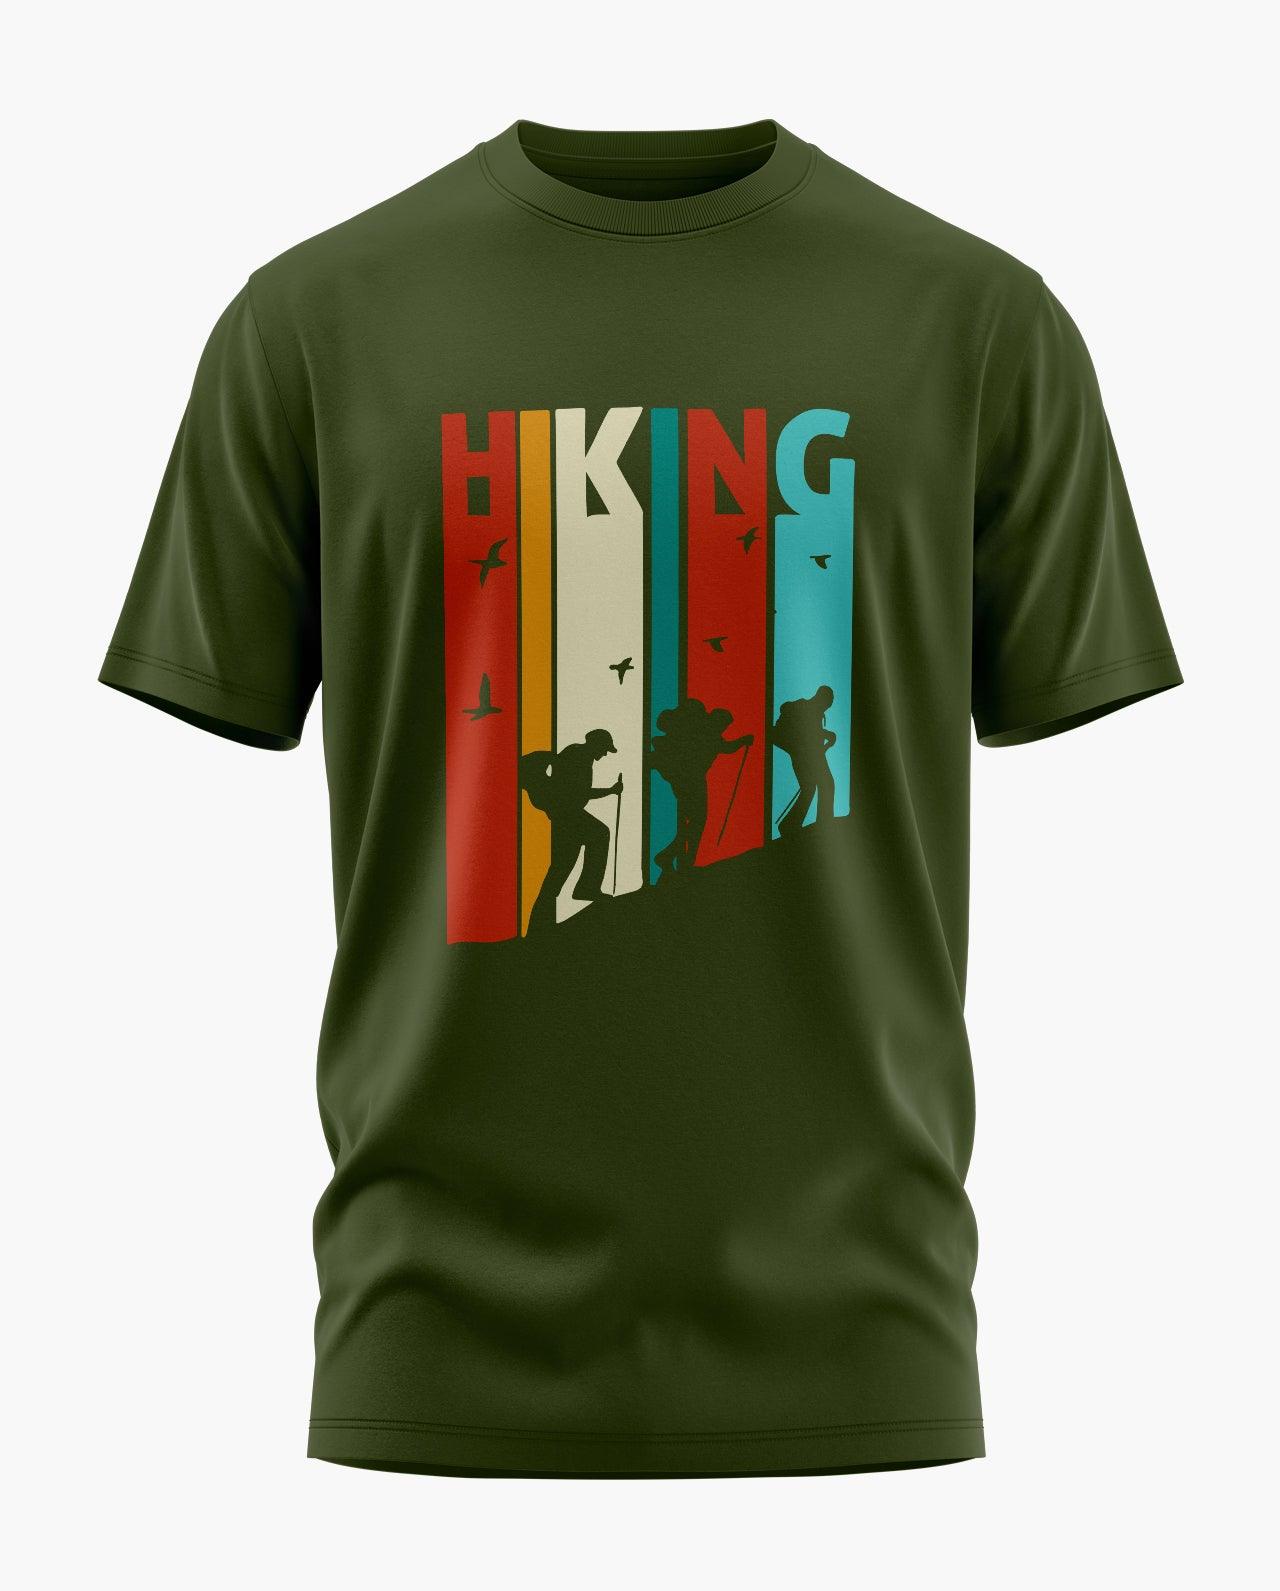 Hiking Typo T-Shirt - Aero Armour